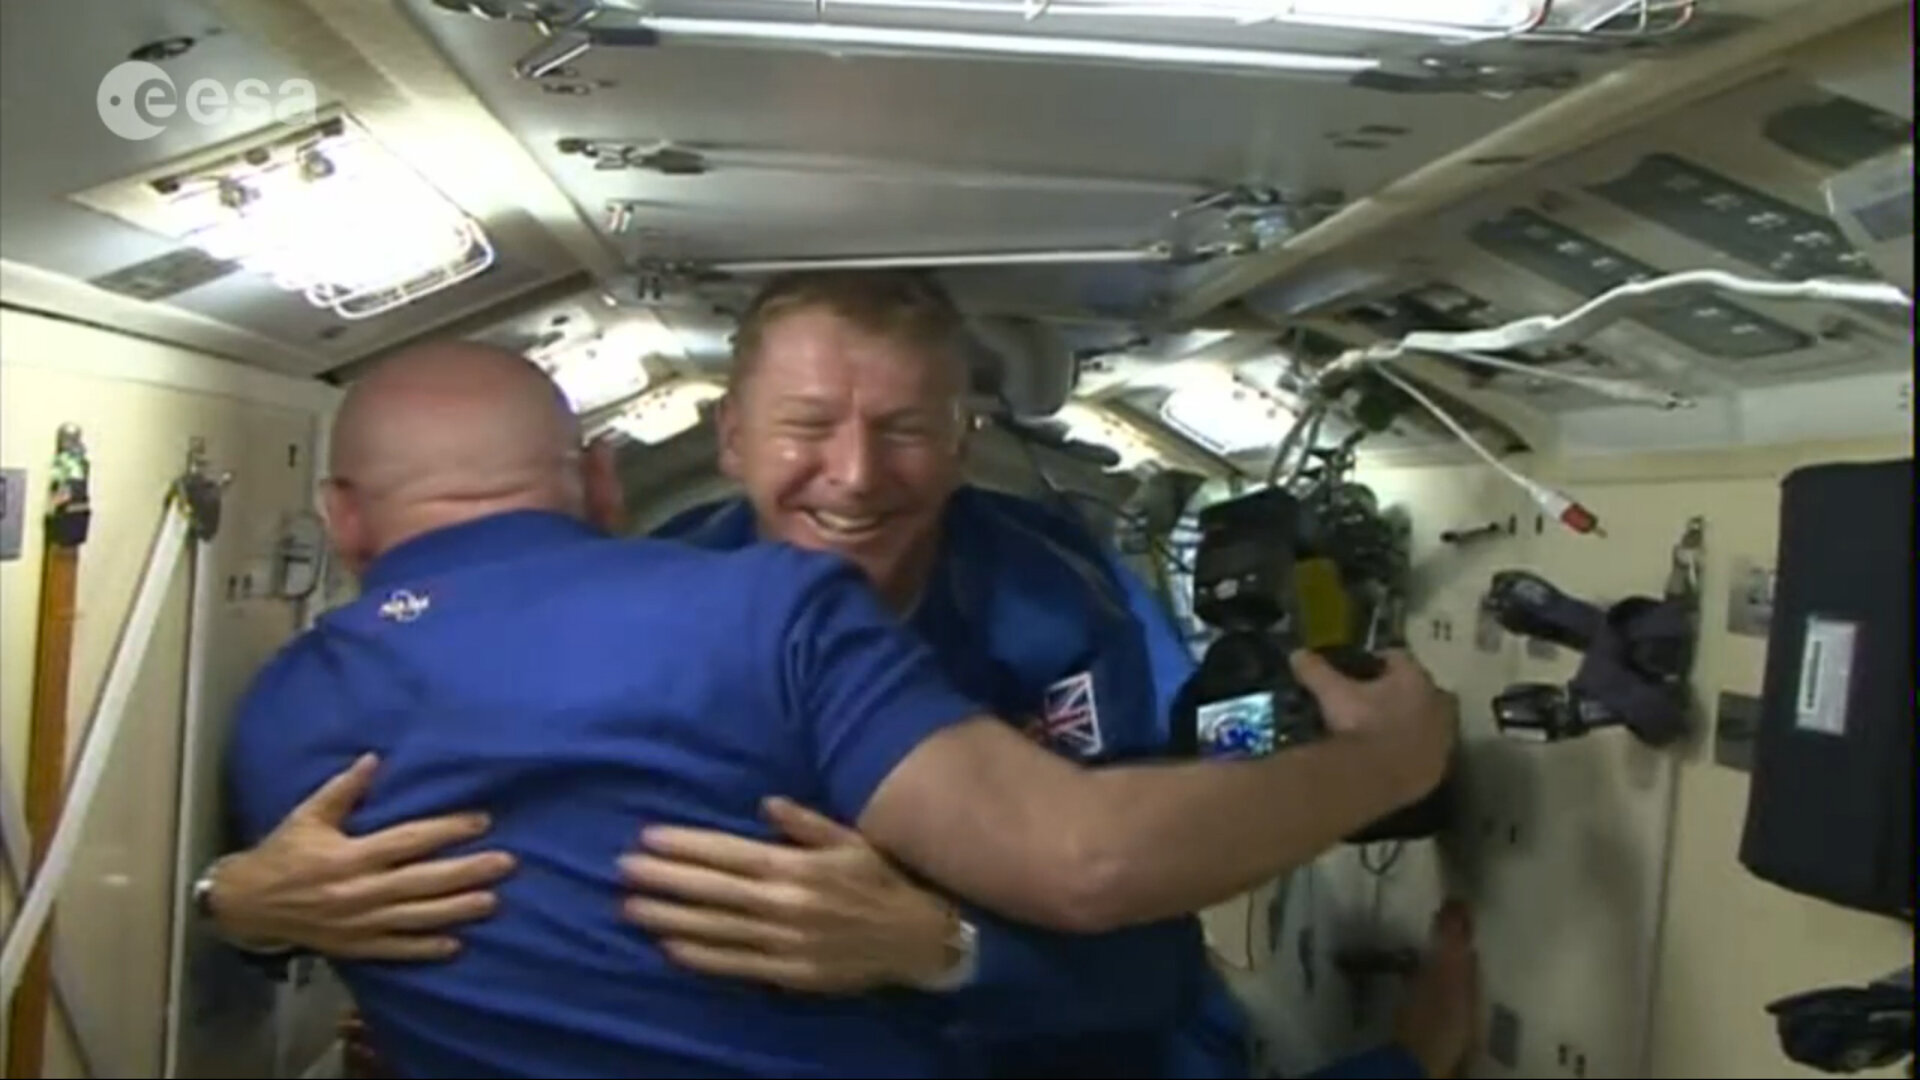 Tim Peake arrives at Space Station